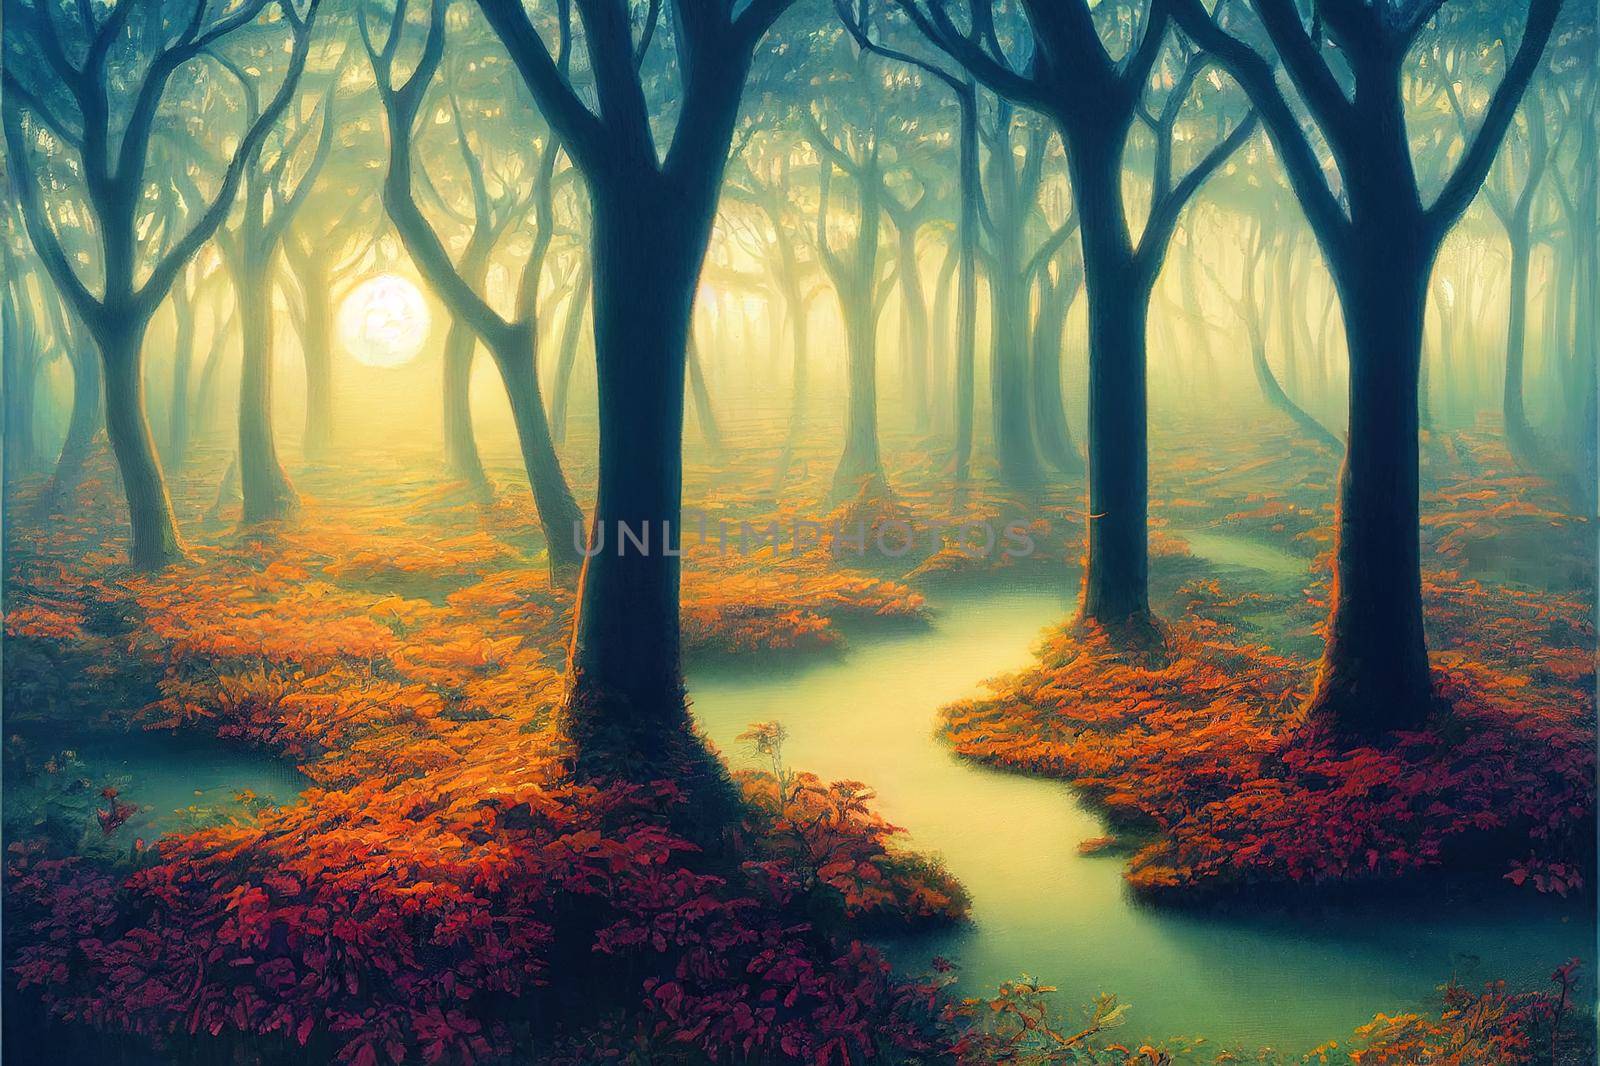 Sunrise morning inside fantasy forest painting illustration by 2ragon